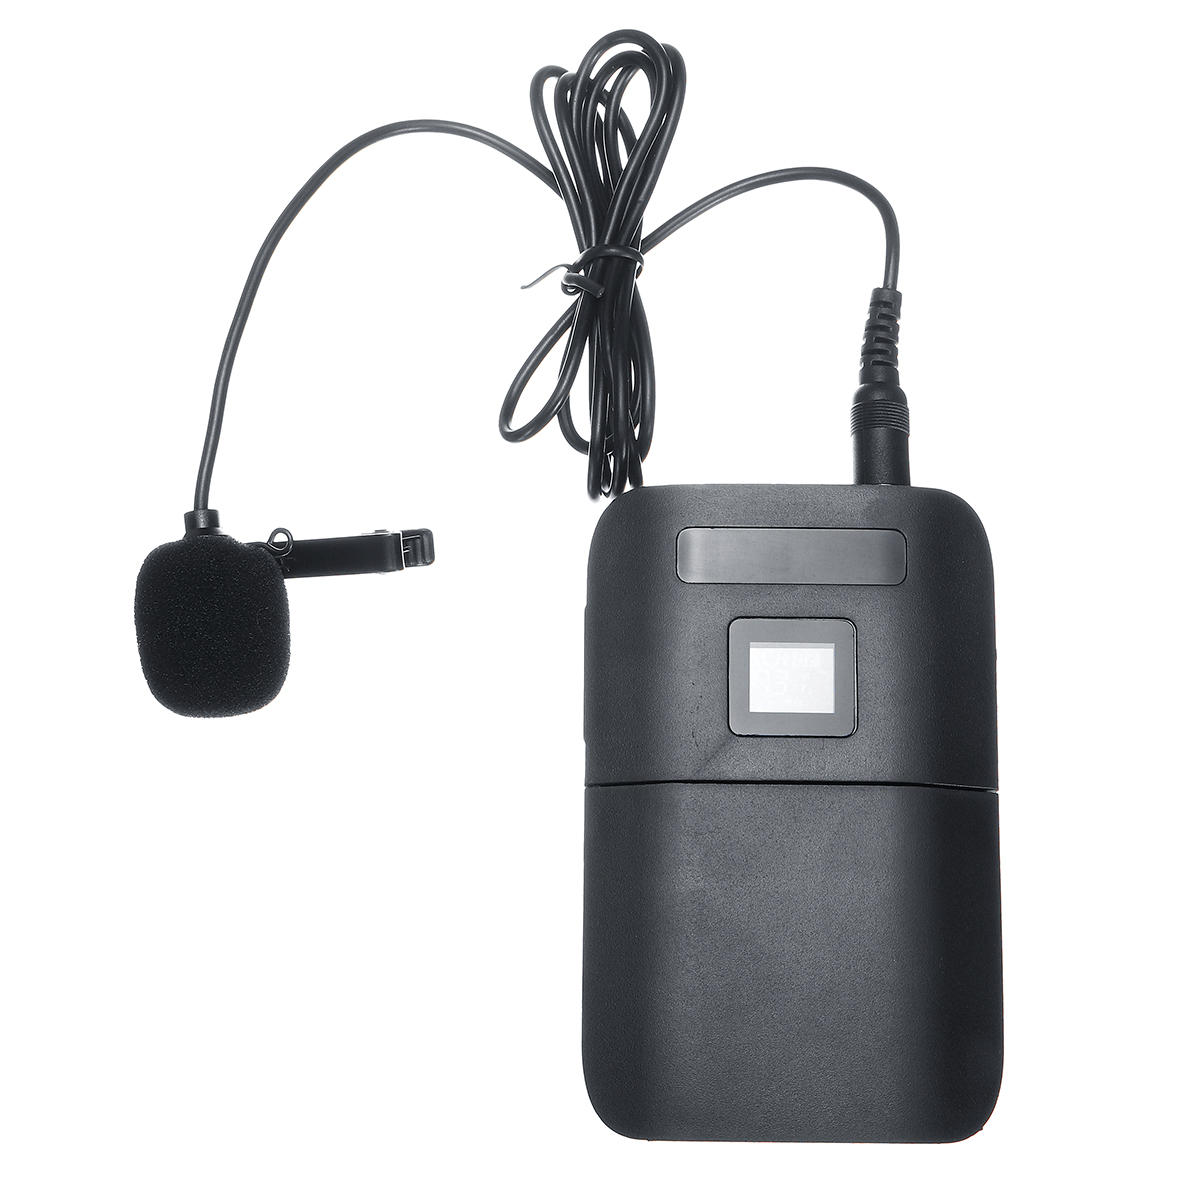 UHF Wireless Micrófono Lavalier Lapel Mic Receptor Auricular doble transmisor para Speech Teach